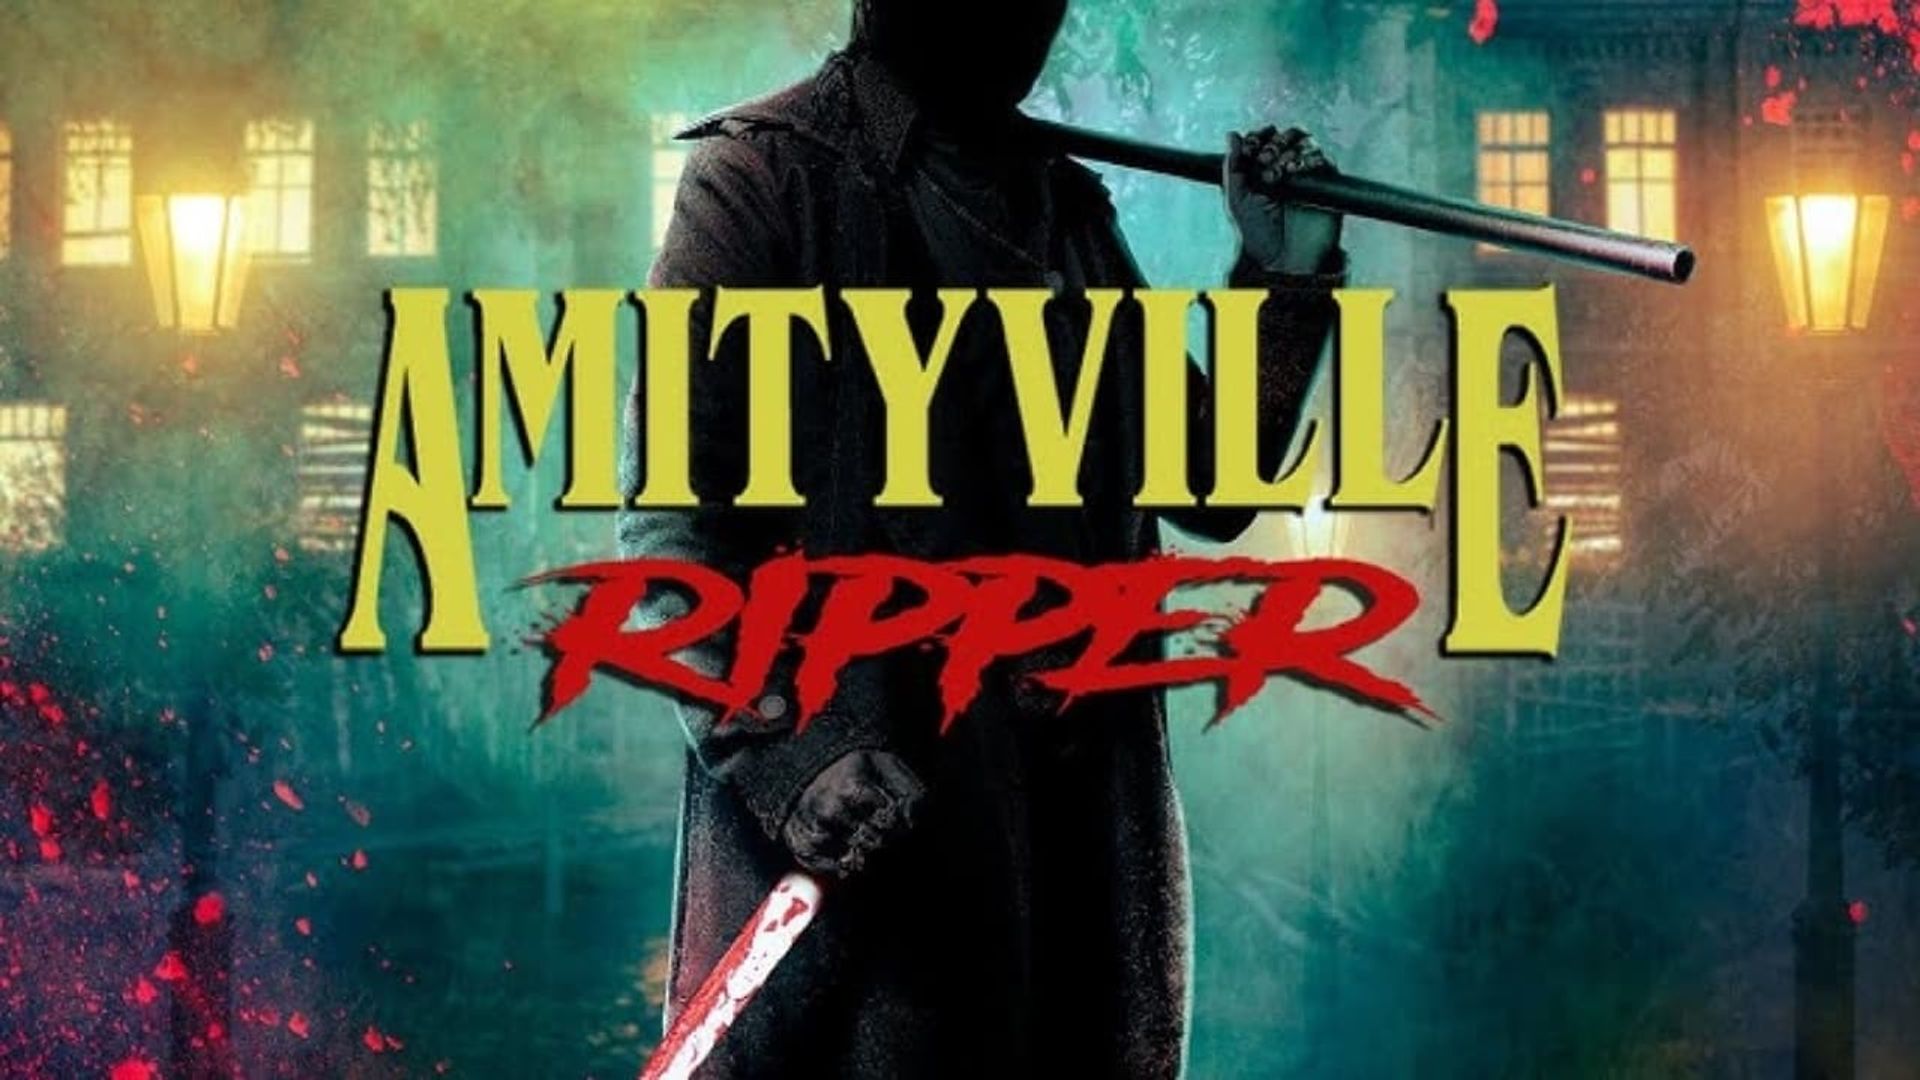 Amityville Ripper background